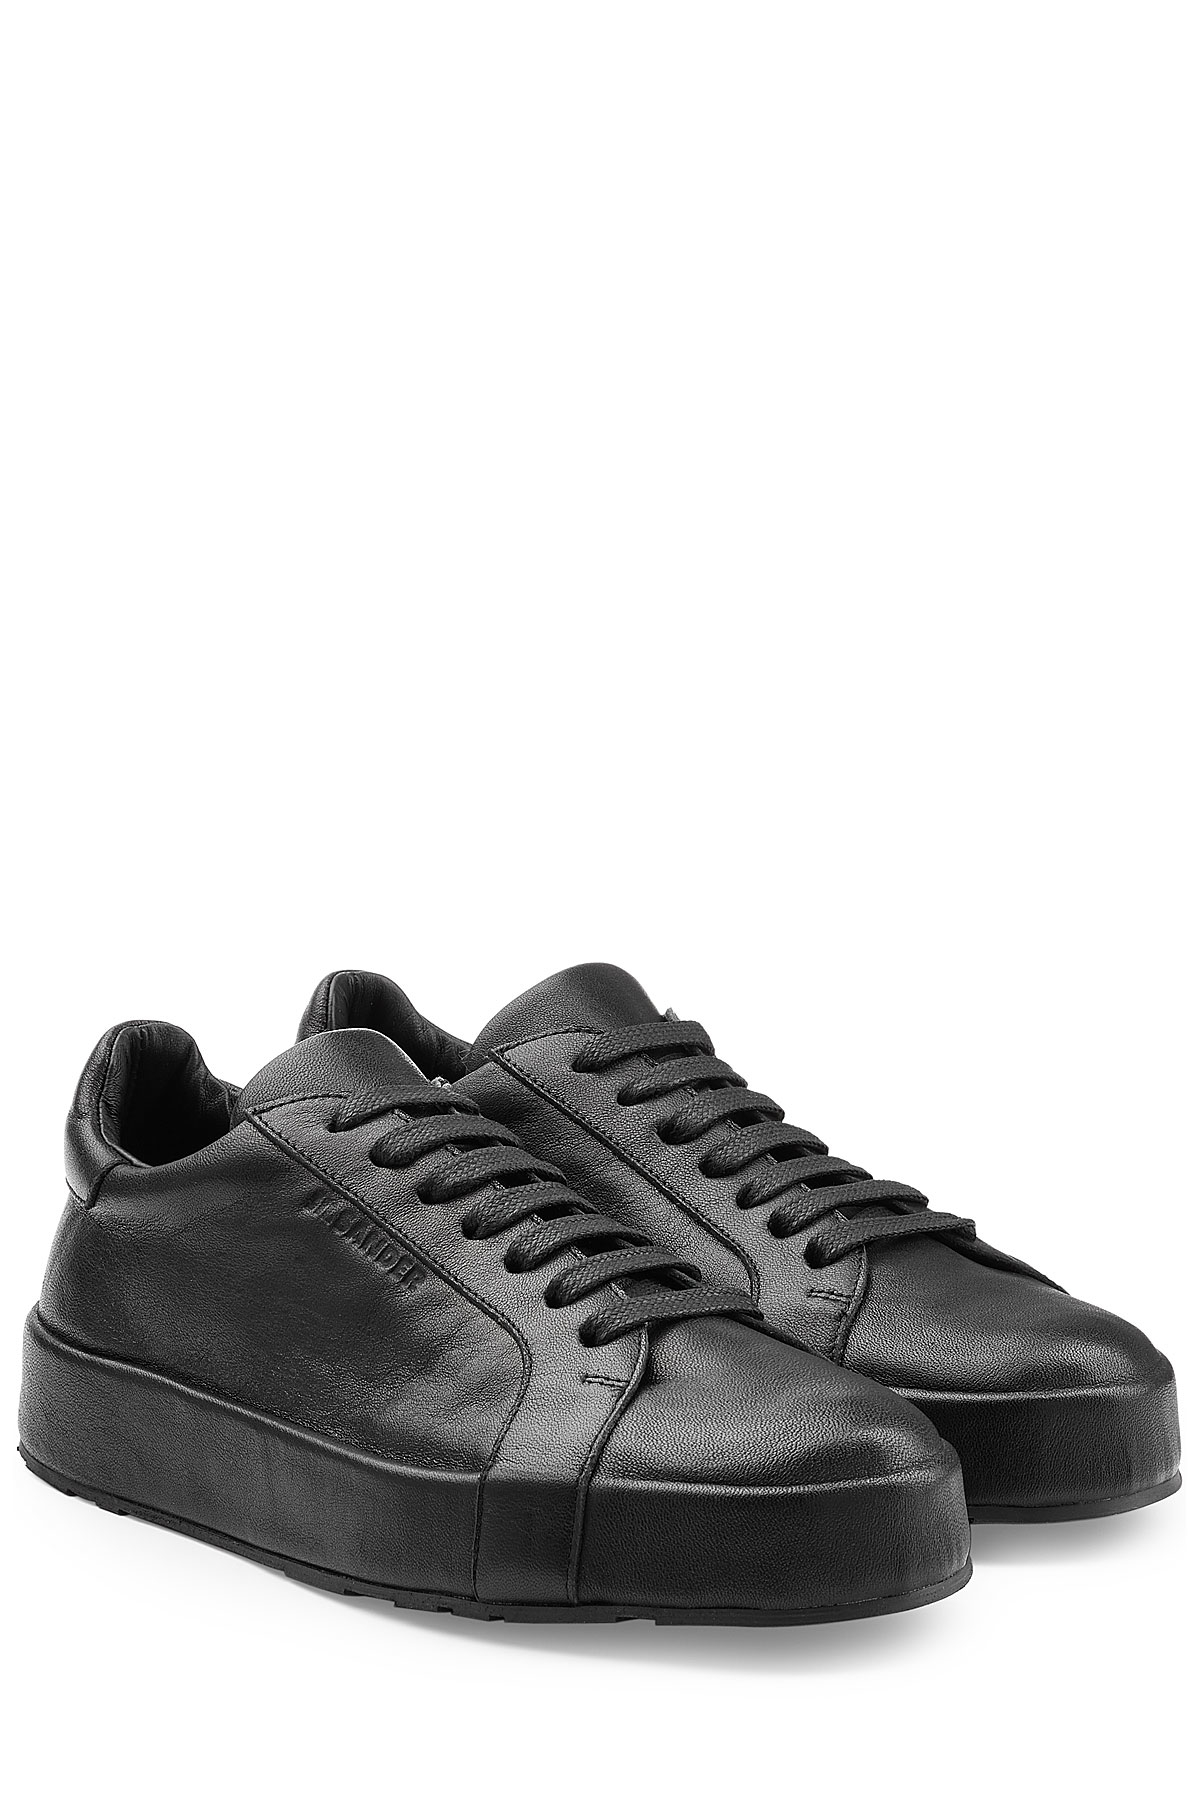 Jil Sander Leather Sneakers in Black - Lyst